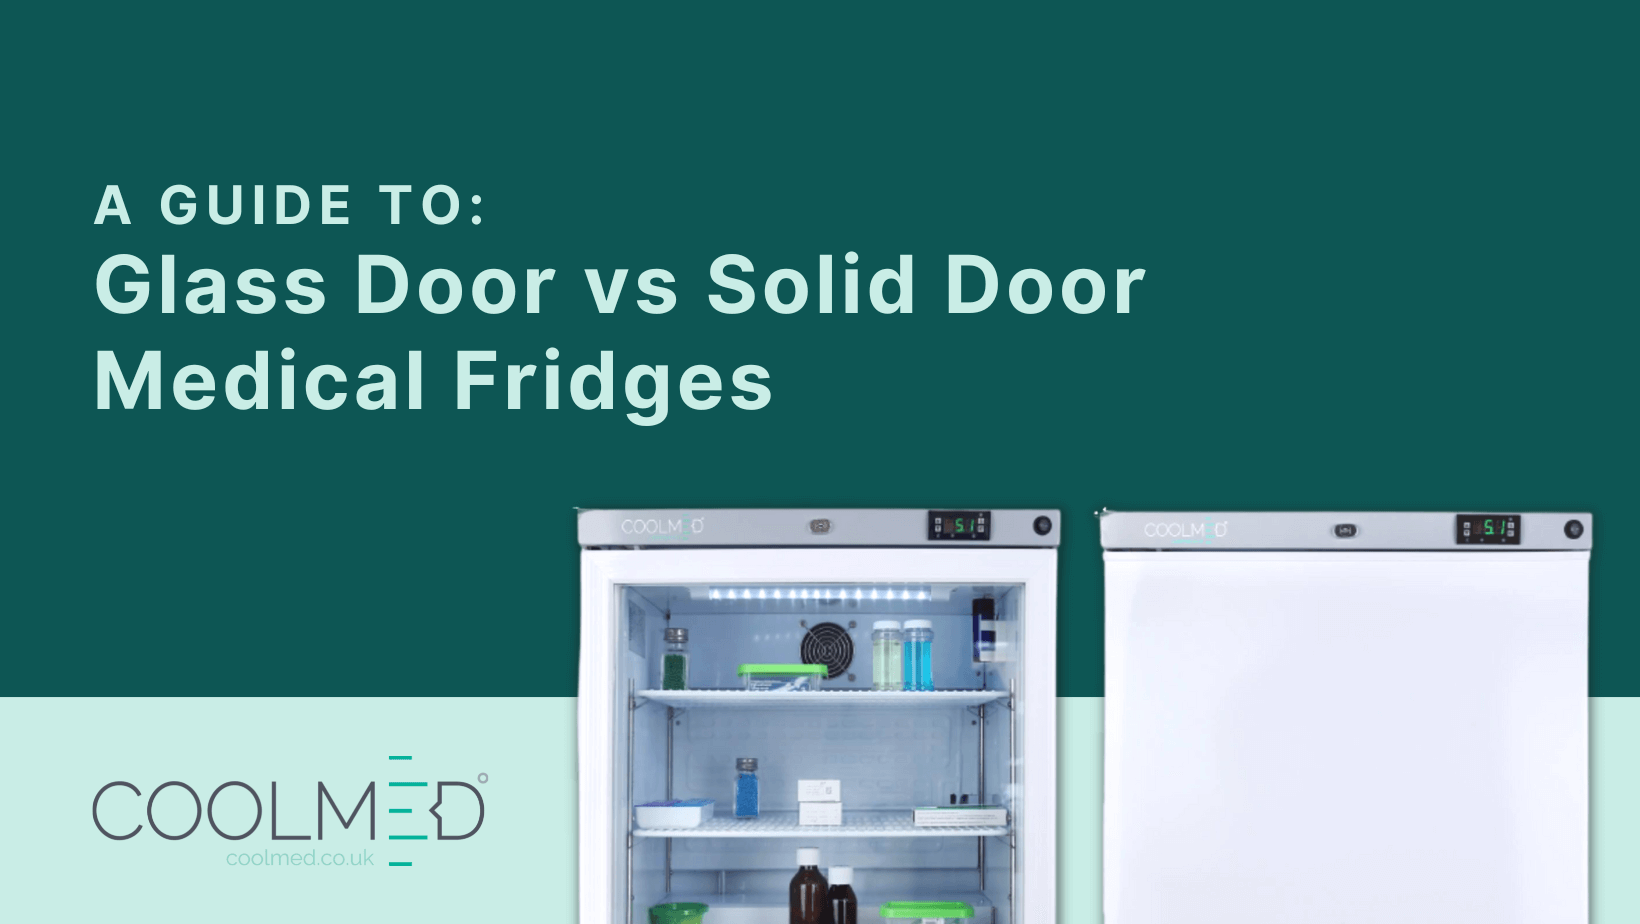 A guide to glass door vs solid door medical fridges graphic by CoolMed